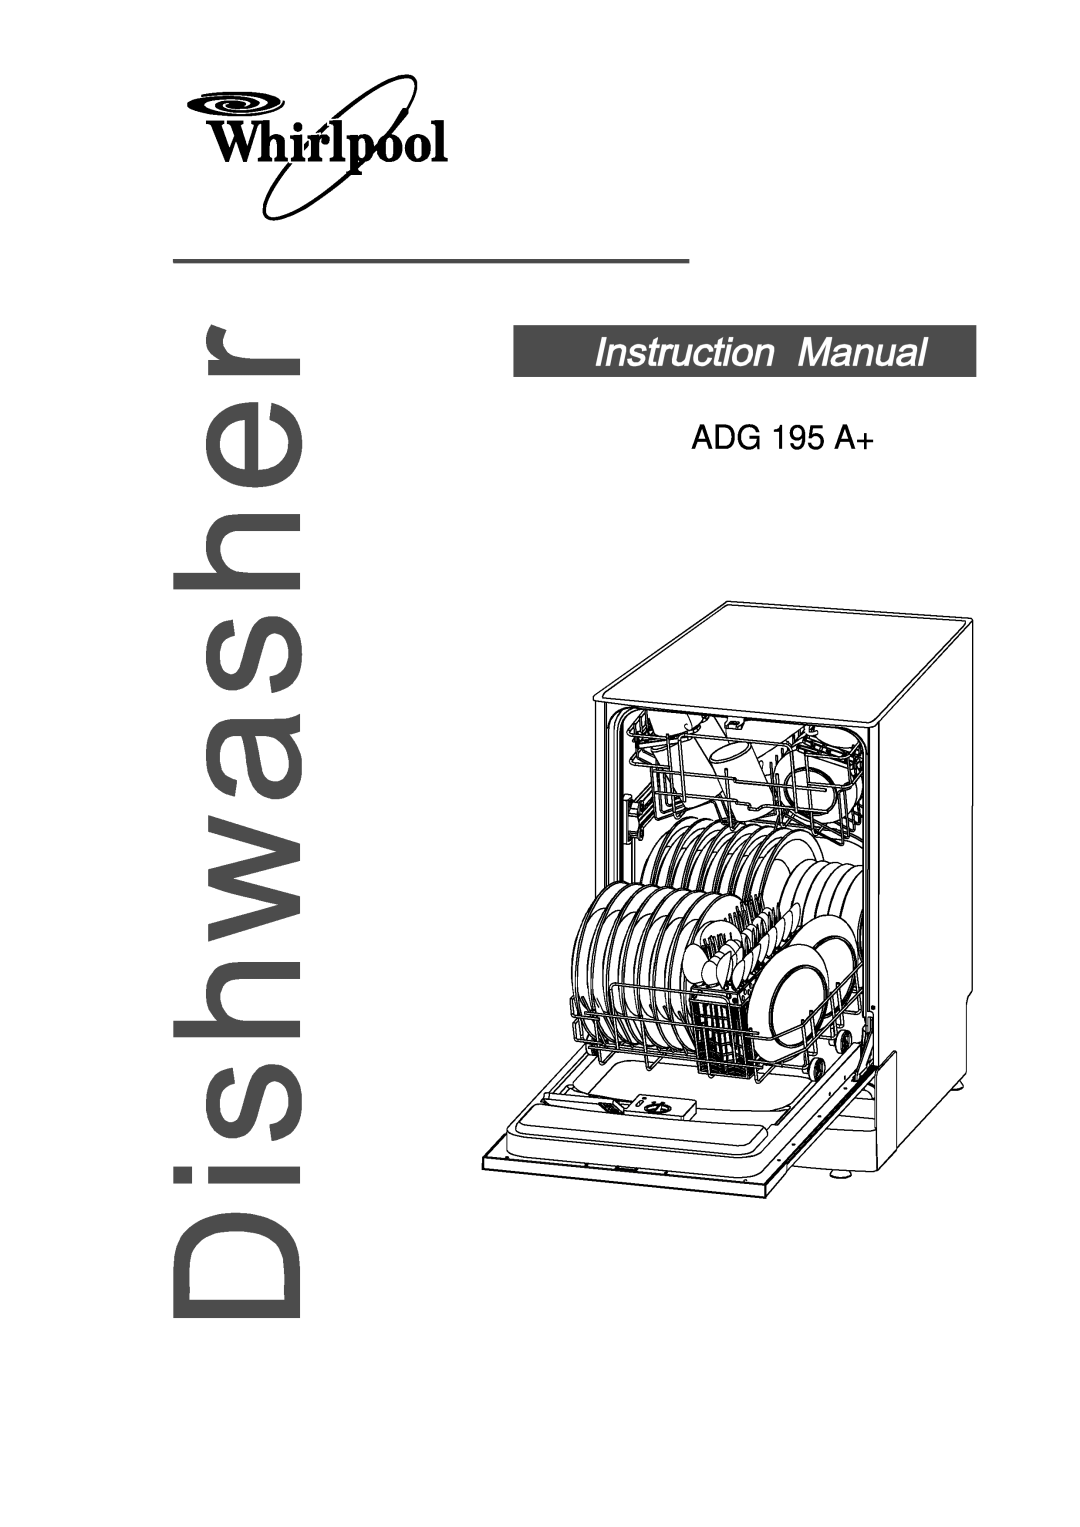 Whirlpool ADG 195 A+ manual 